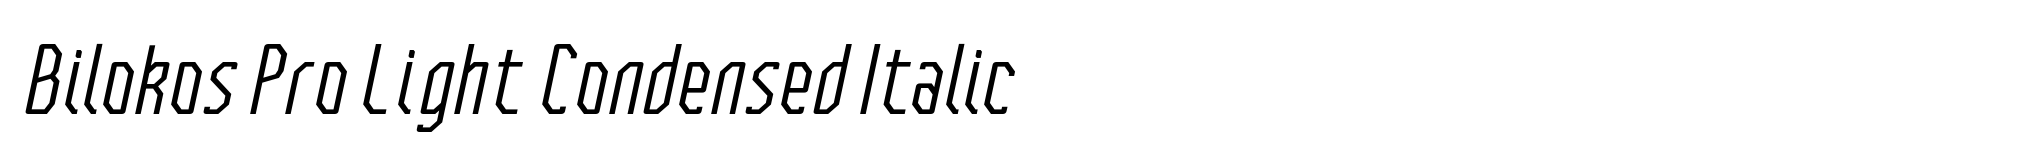 Bilokos Pro Light Condensed Italic image